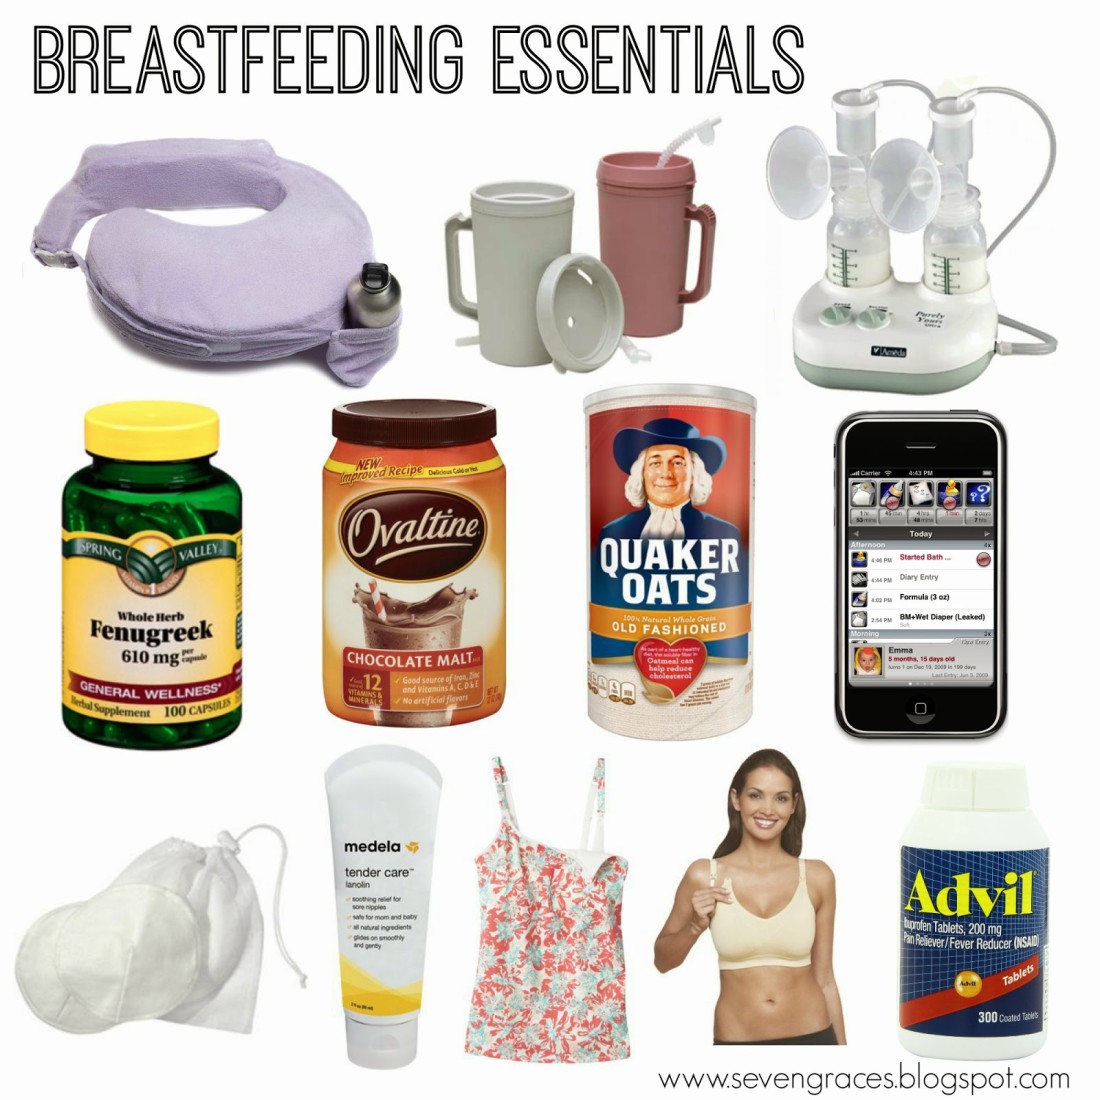 https://www.sevengracesblog.com/wp-content/uploads/2014/08/breastfeeding-essentials-1100x1100.jpg